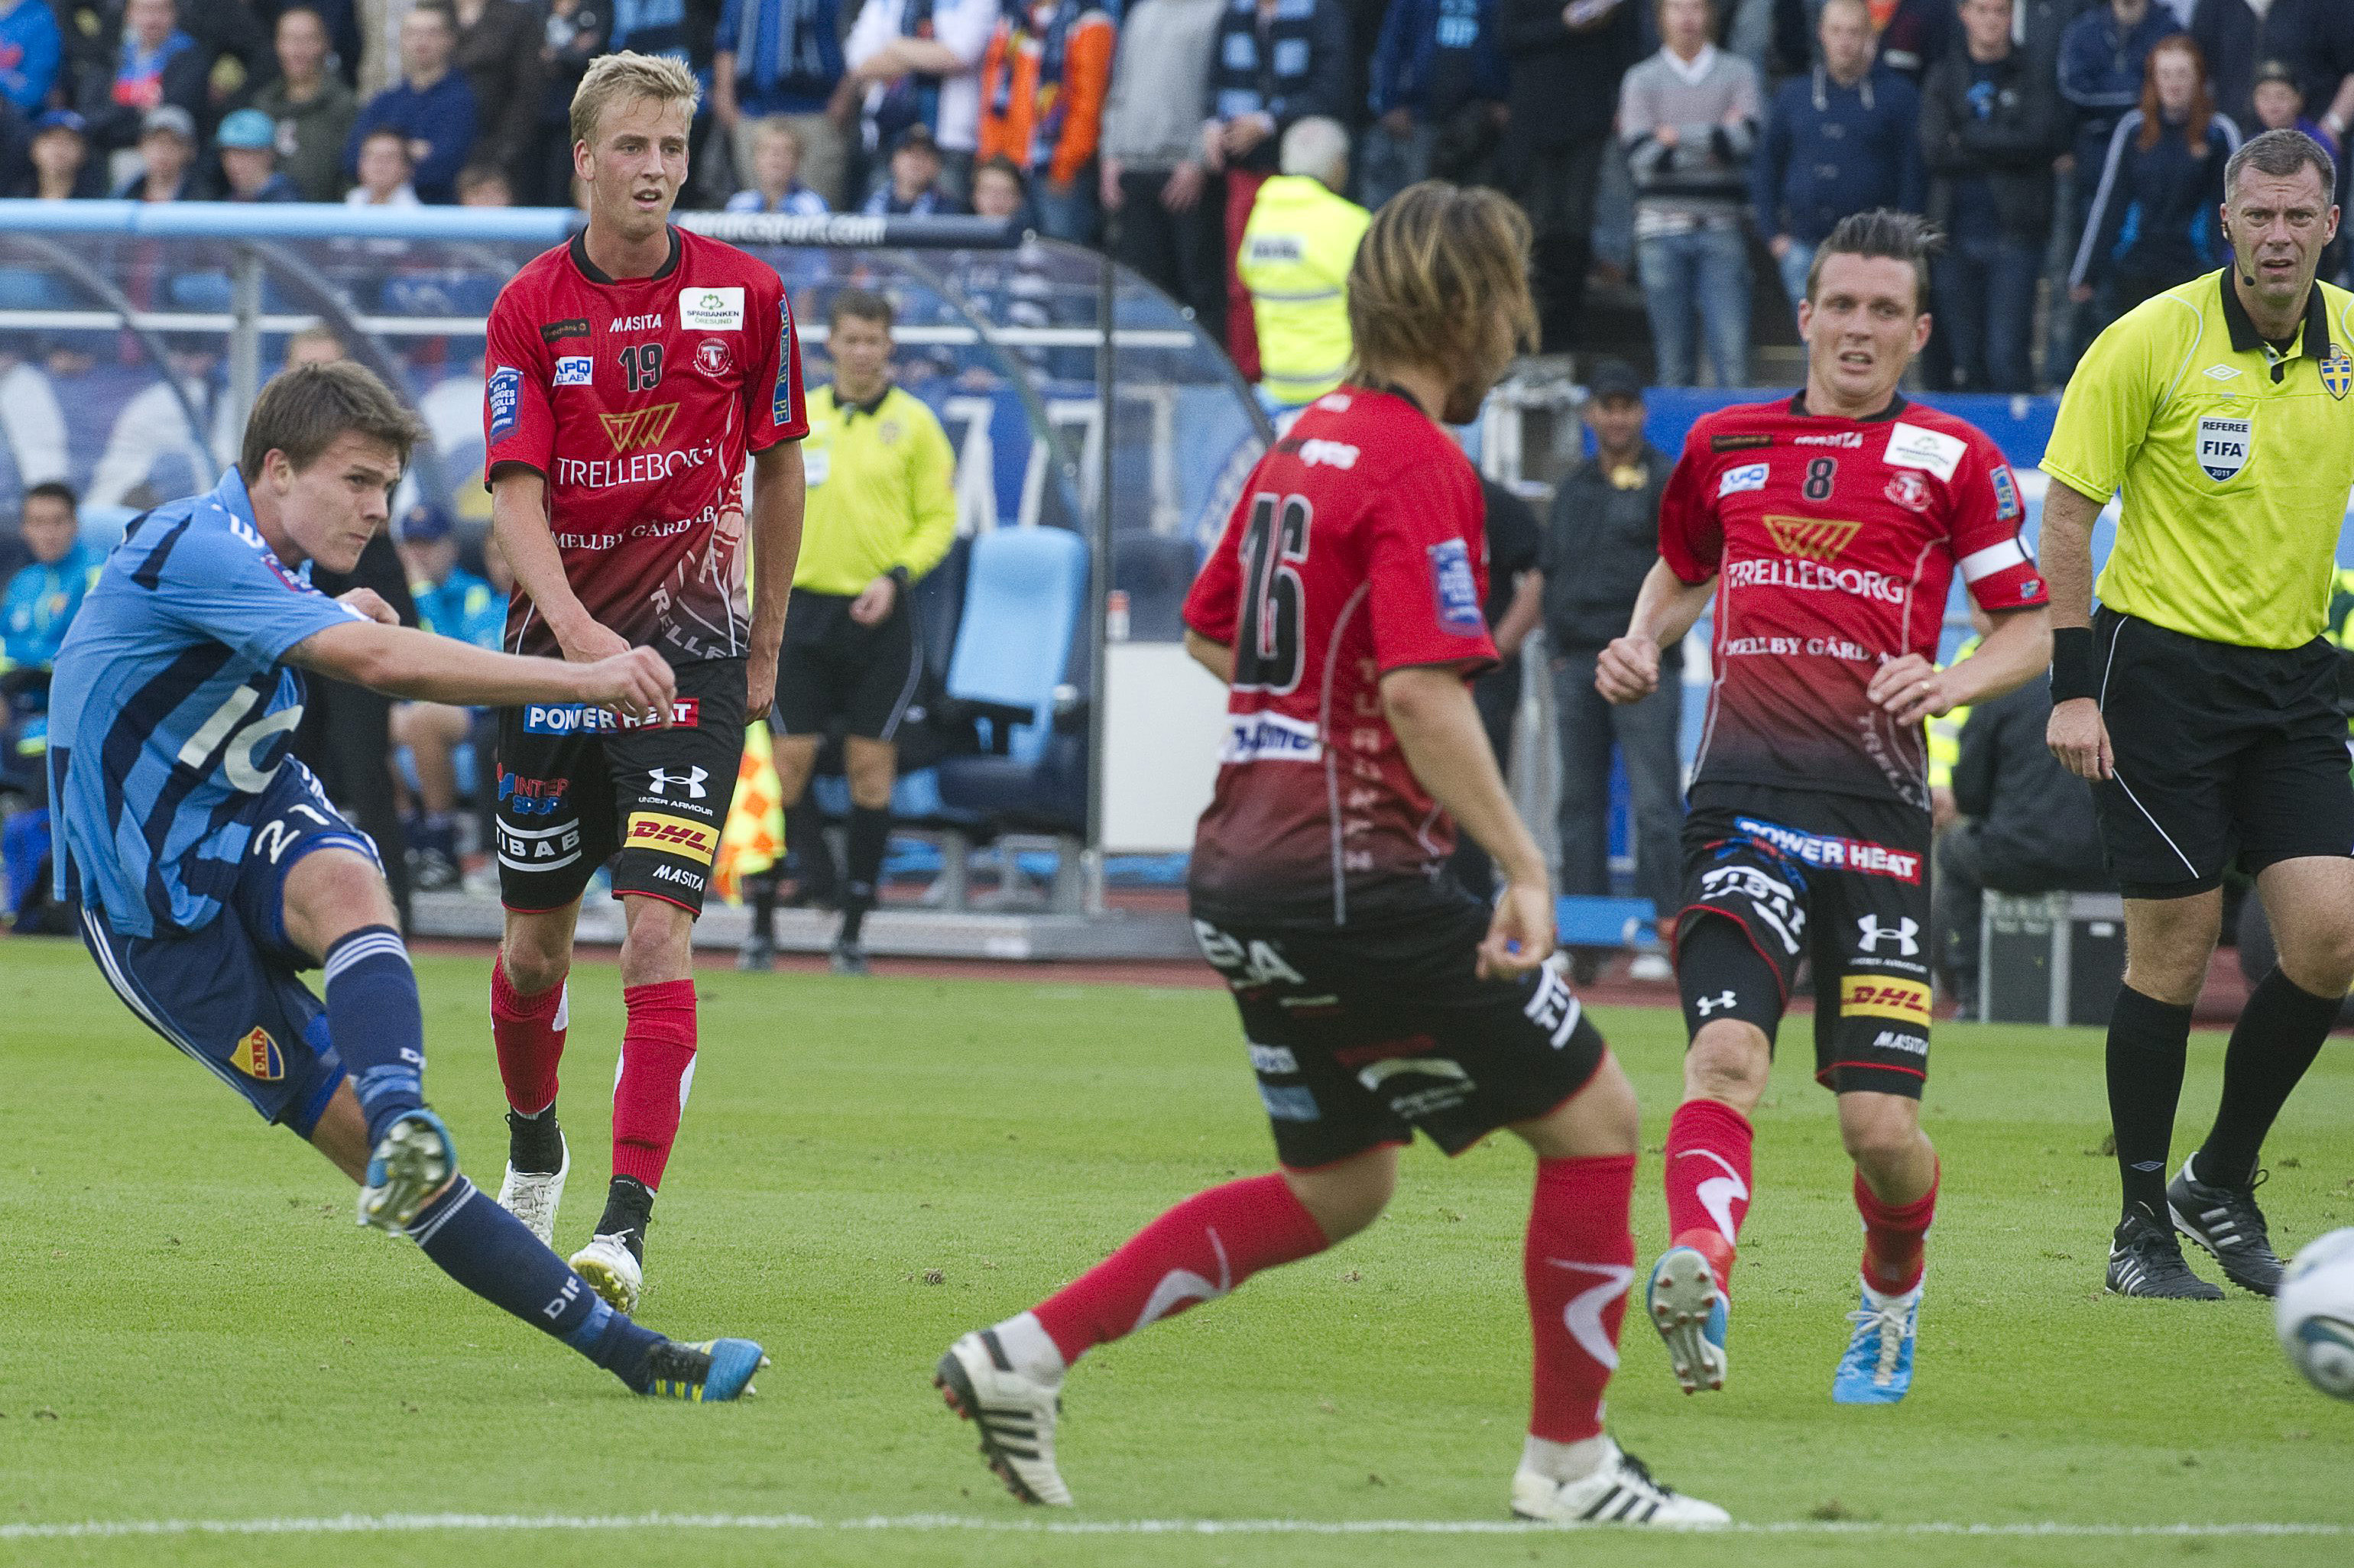 Kennedy Igboananike, Nicolaj Agger, Trelleborg, Djurgården IF, Allsvenskan, Fredrik Jensen